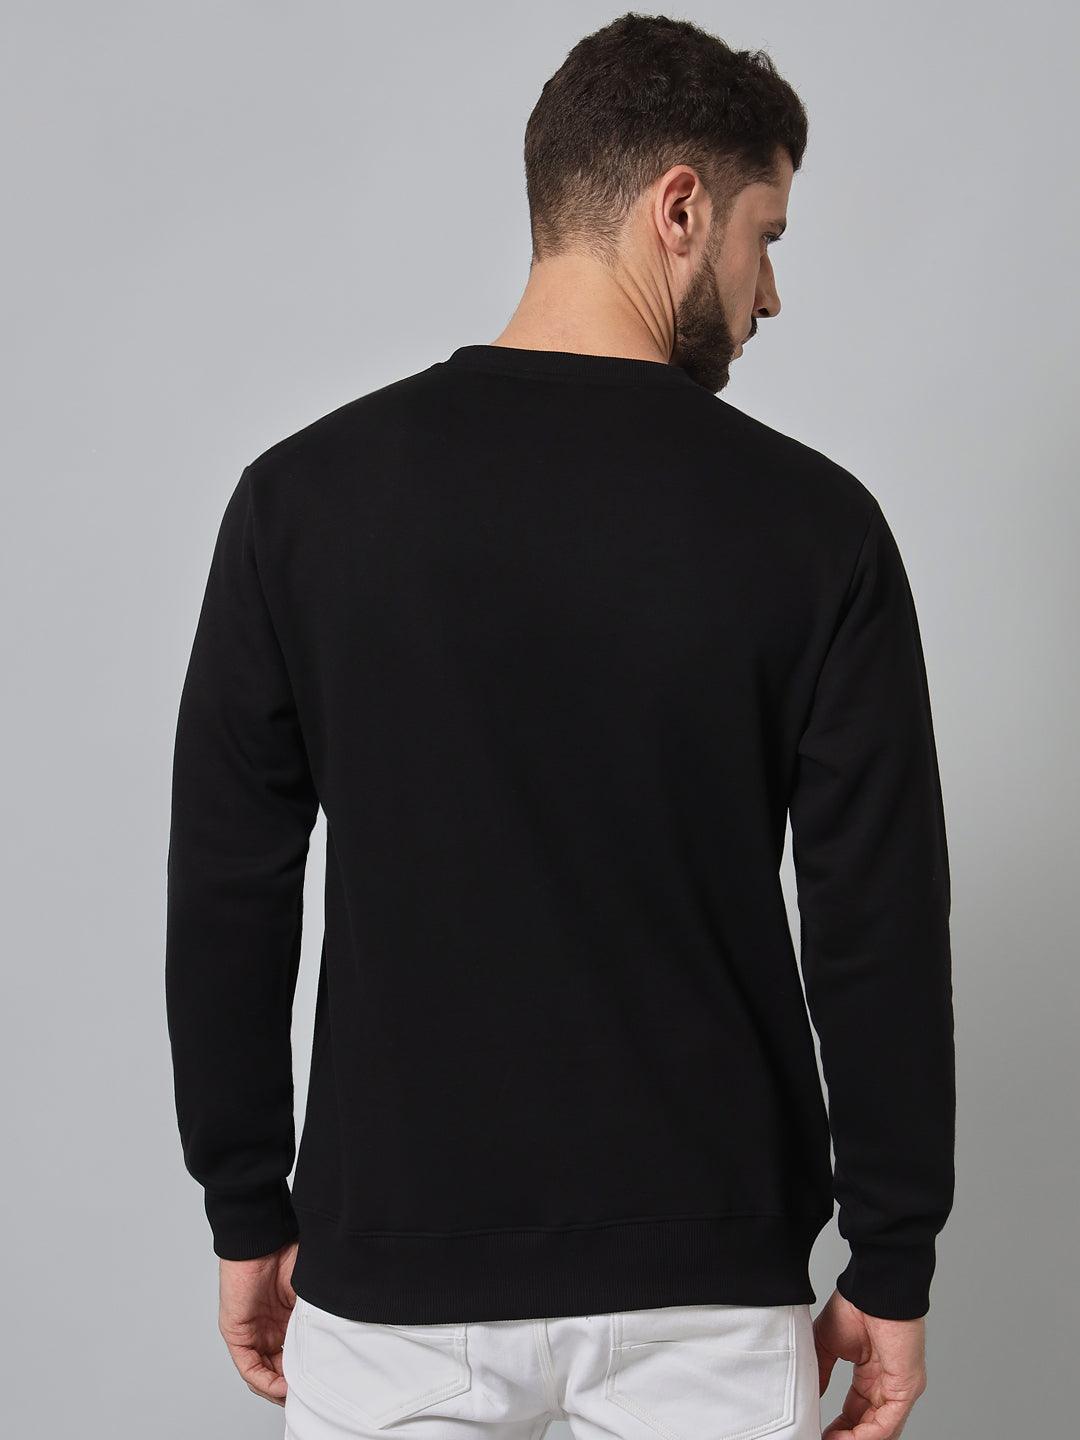 Griffel Men's Cotton Fleece Round Neck Black Sweatshirt with Full Sleeve and Teddy Logo Print - griffel